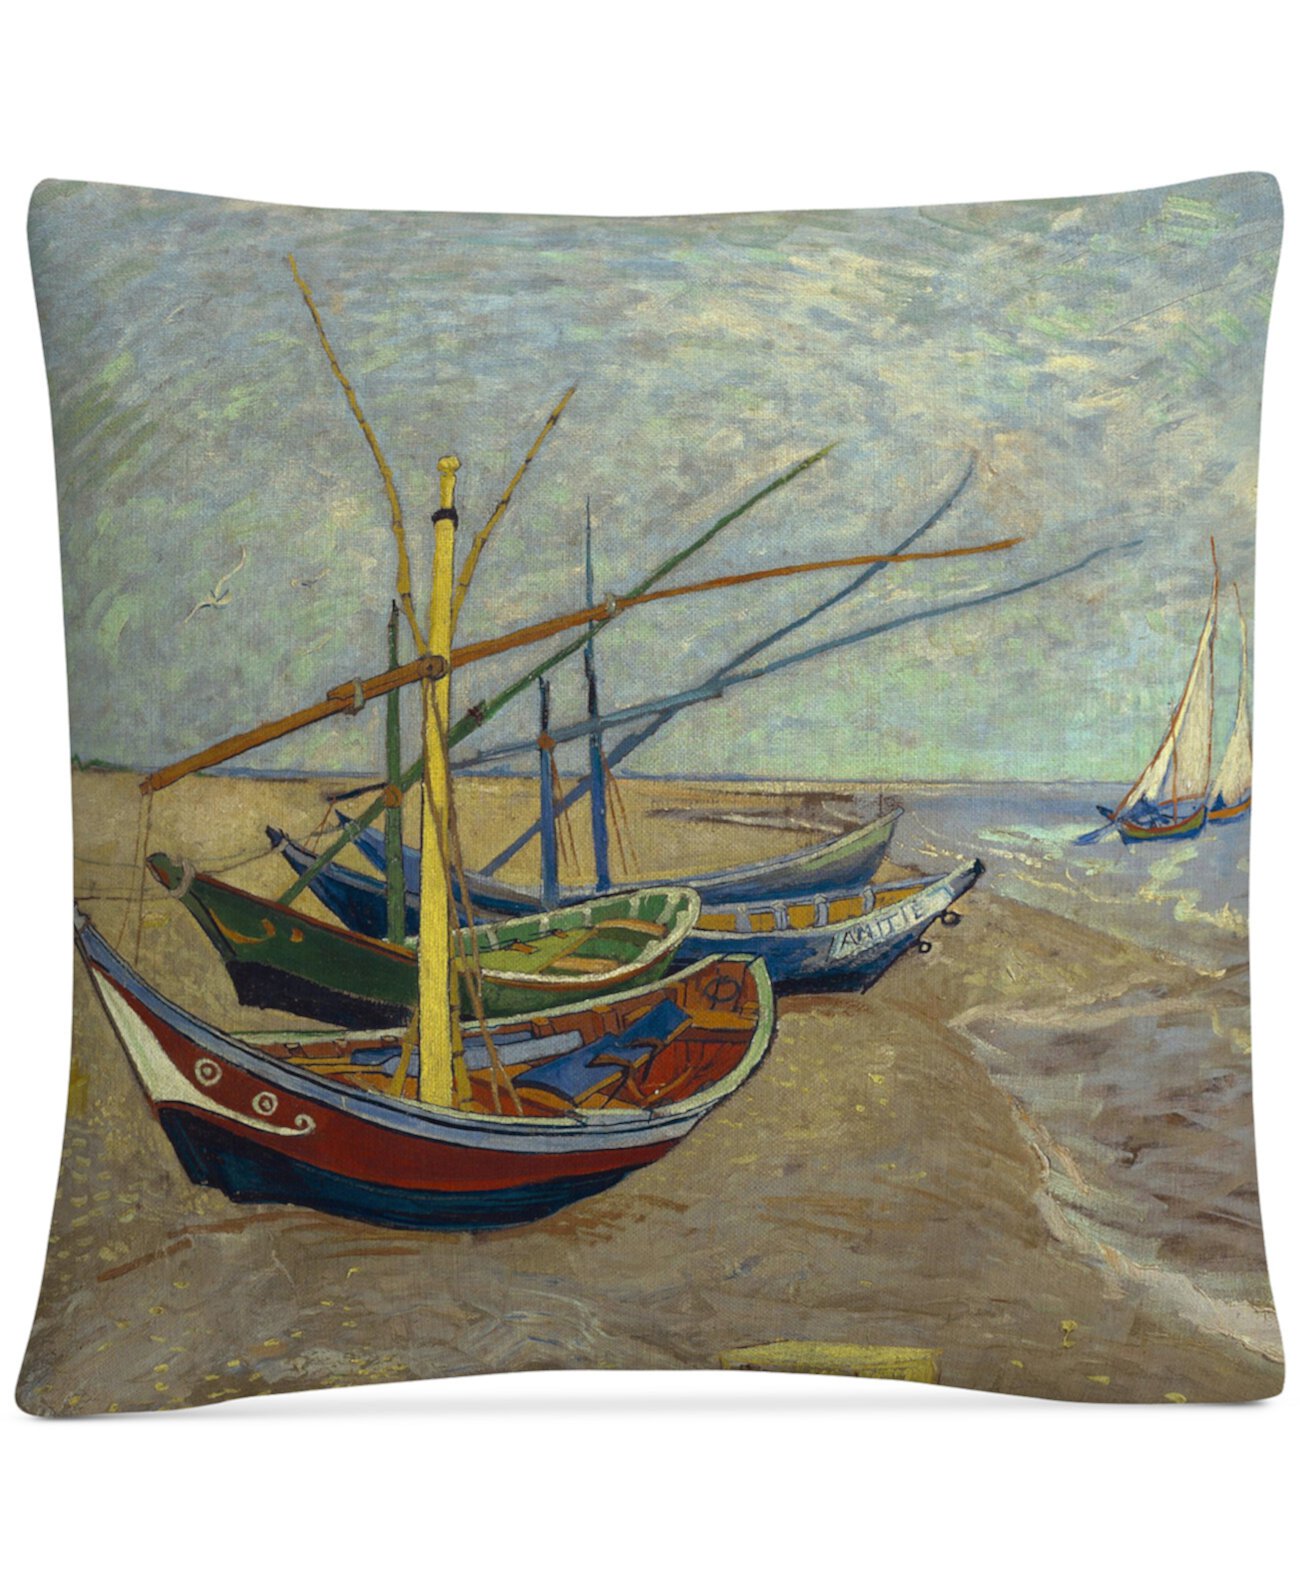 Рыболовные лодки Винсента Ван Гога на пляже Декоративная подушка размером 16 x 16 дюймов BALDWIN